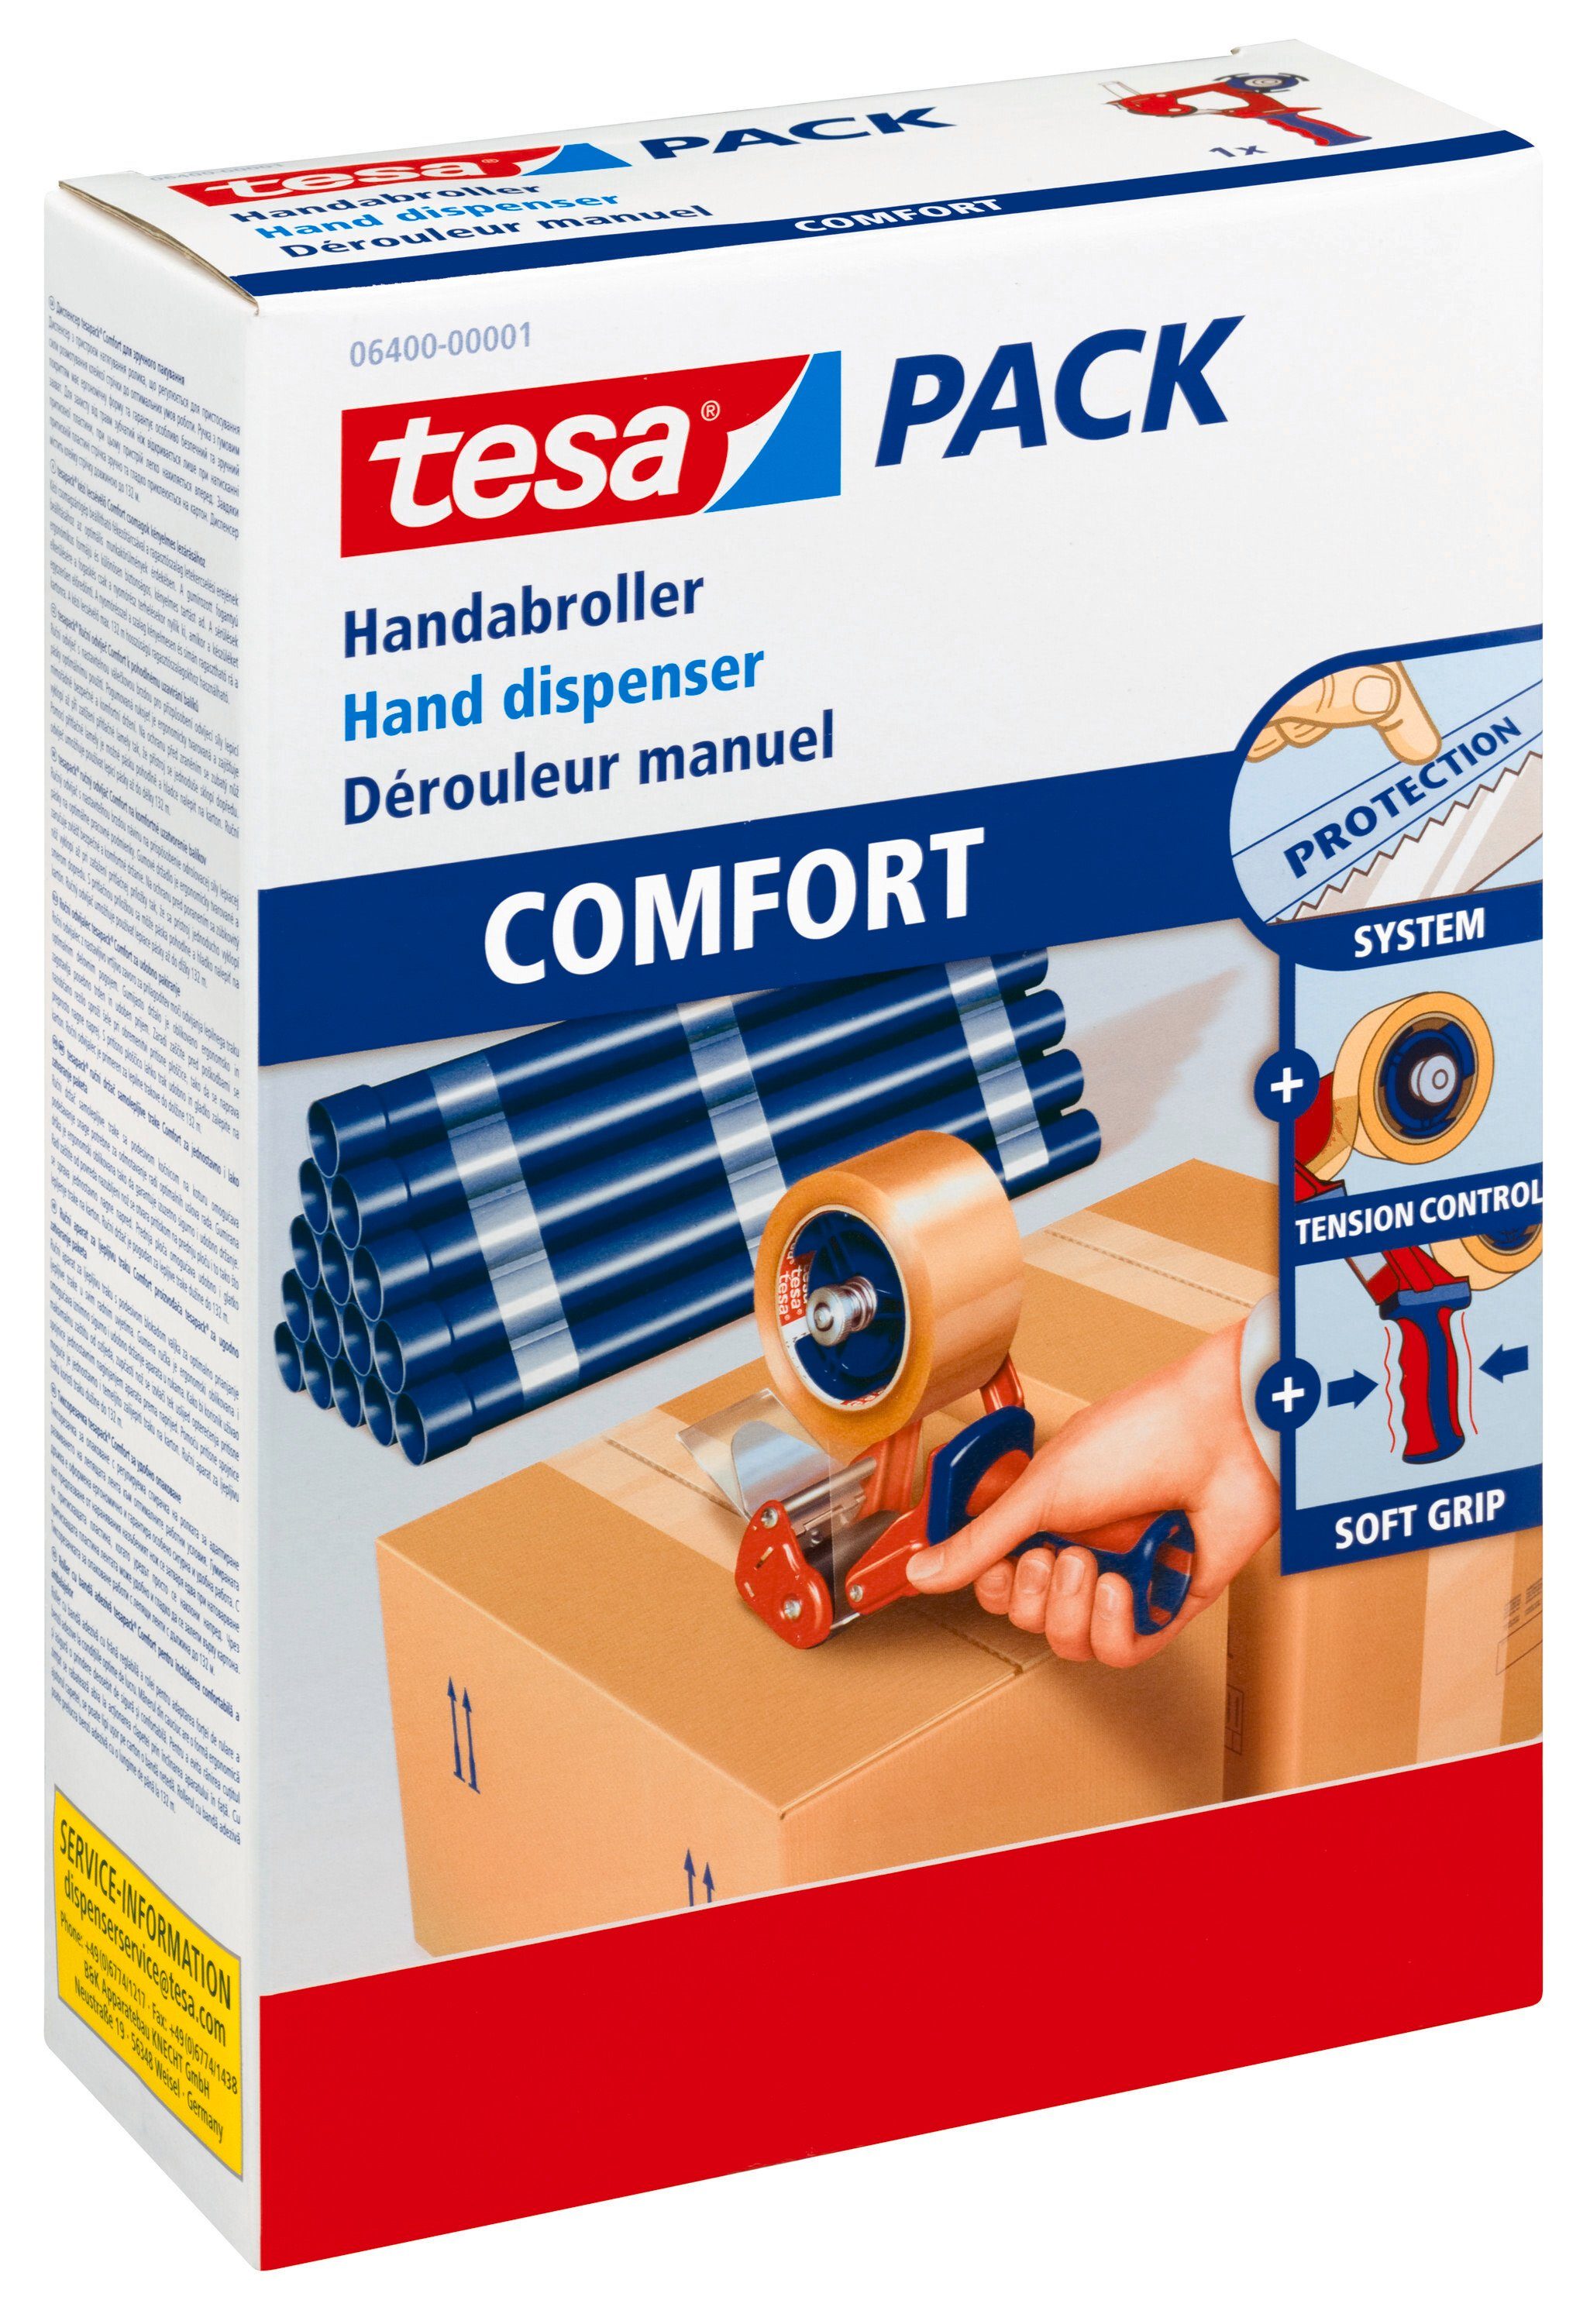 tesa Klebeband tesapack COMFORT Handabroller (Packung, 1-St) Packbandabroller für leichtes & sicheres Verpacken - blau / rot | Klebefilme